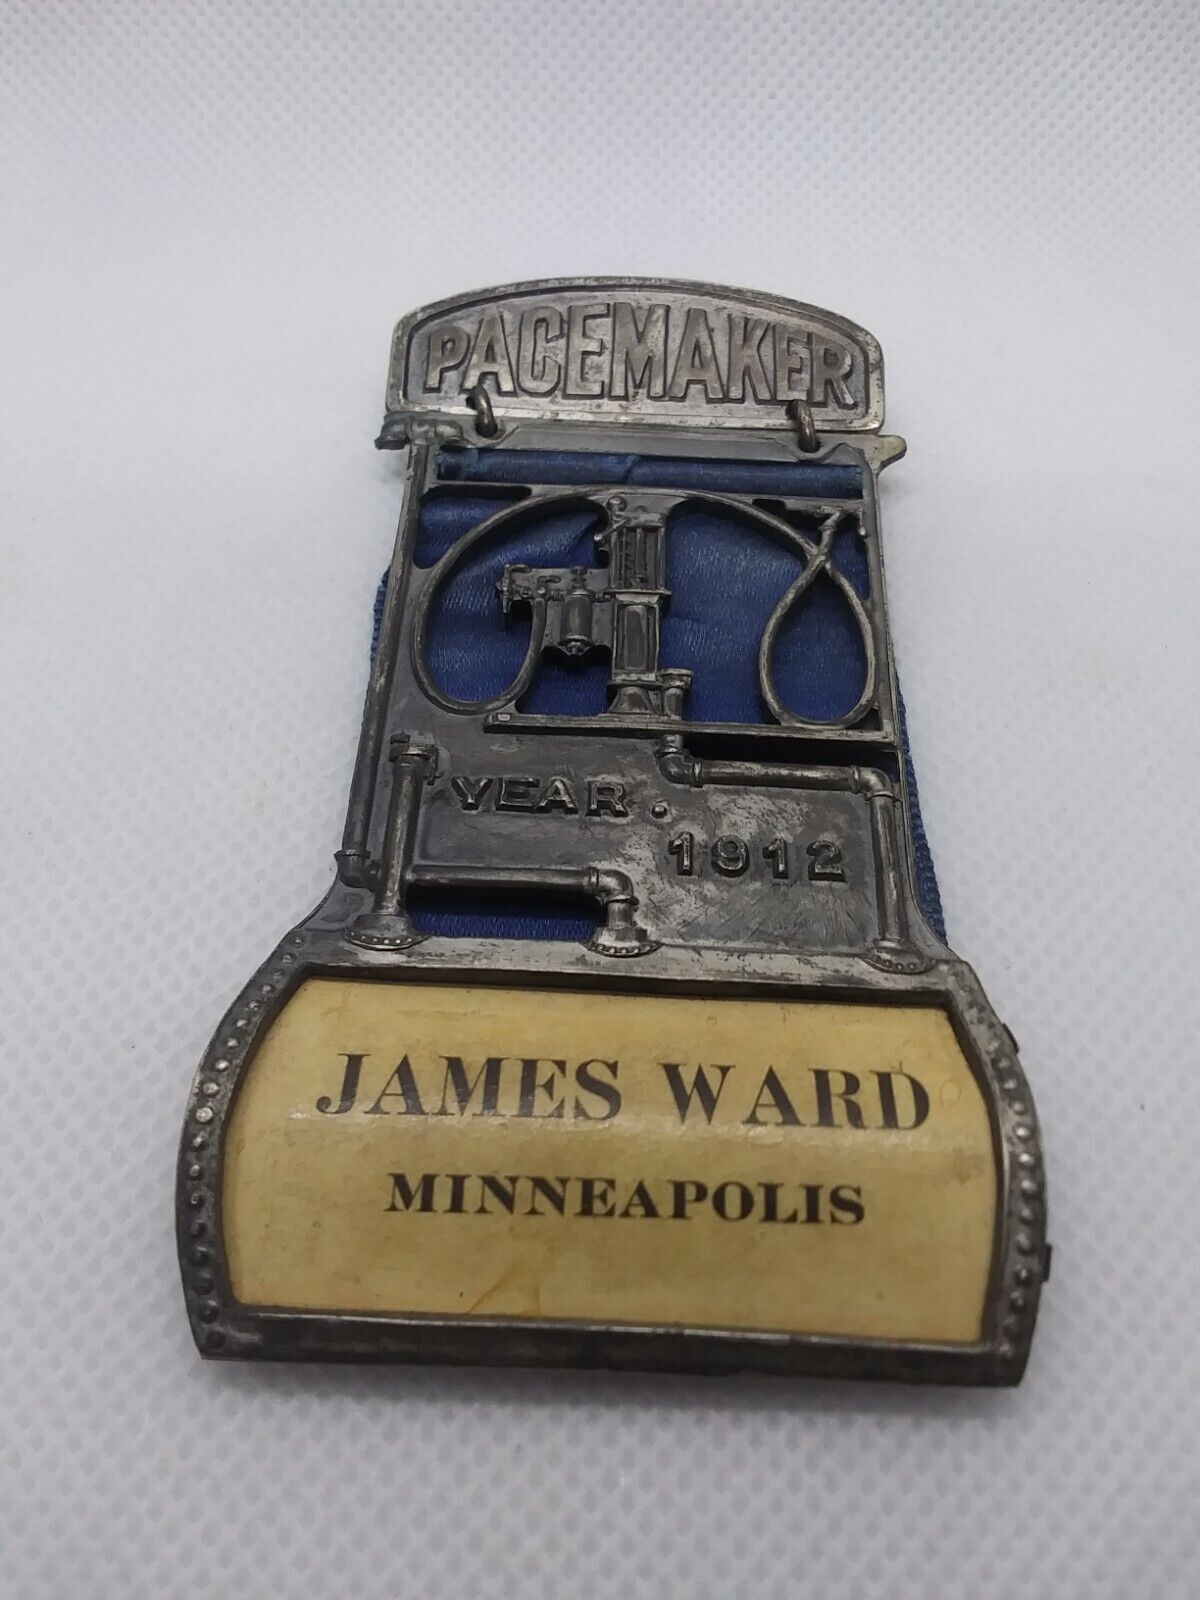 Antique 1912 Pacemaker James Ward Minneapolis Award Ribbon Pinback